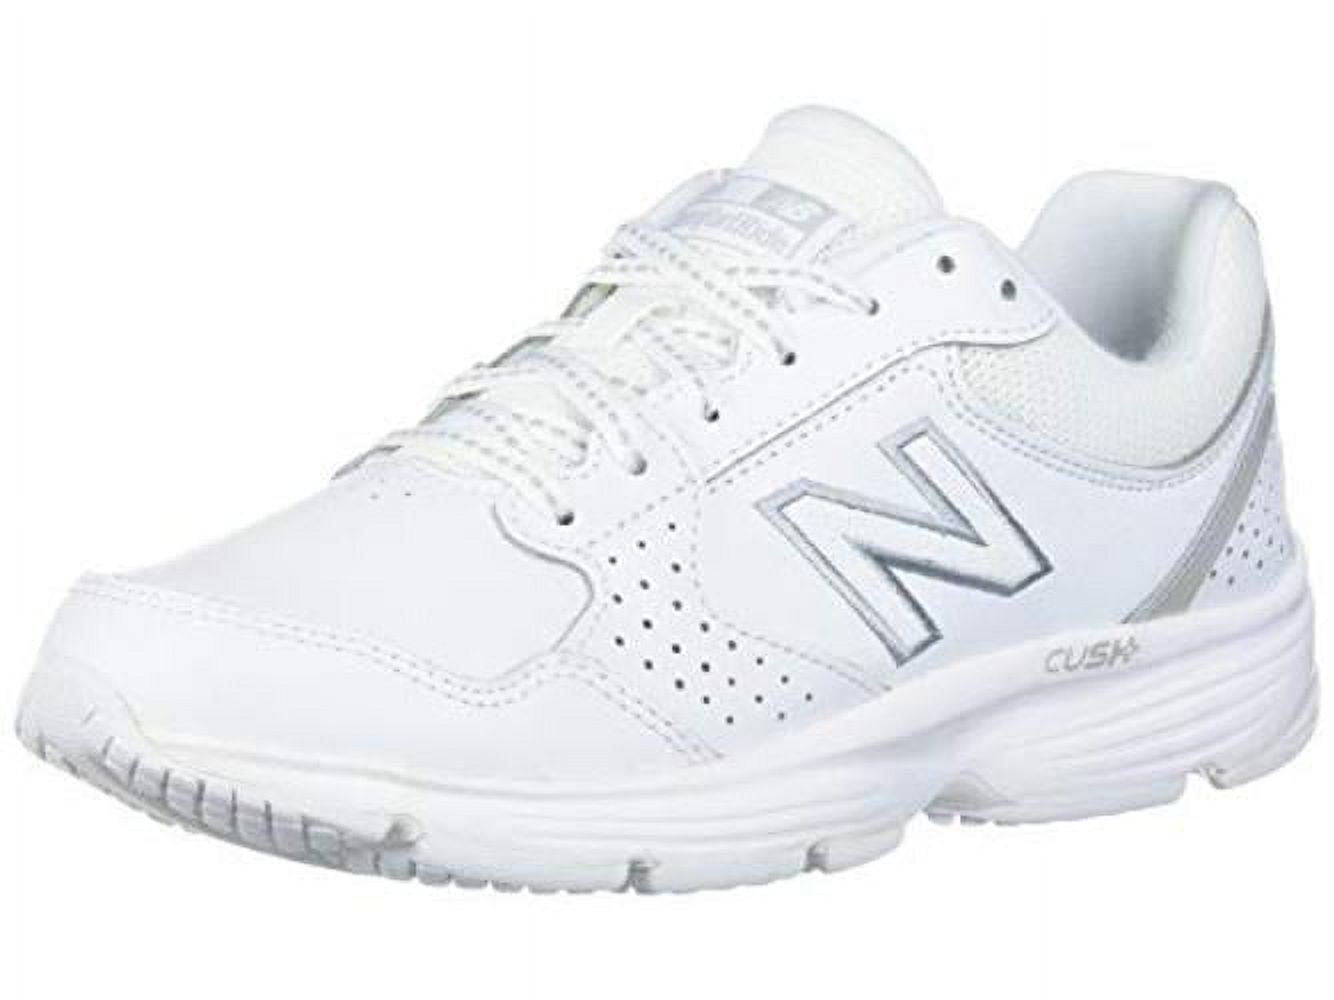 New Balance Women's 411v1 Running Shoe, White, Size 9.5 - Walmart.com